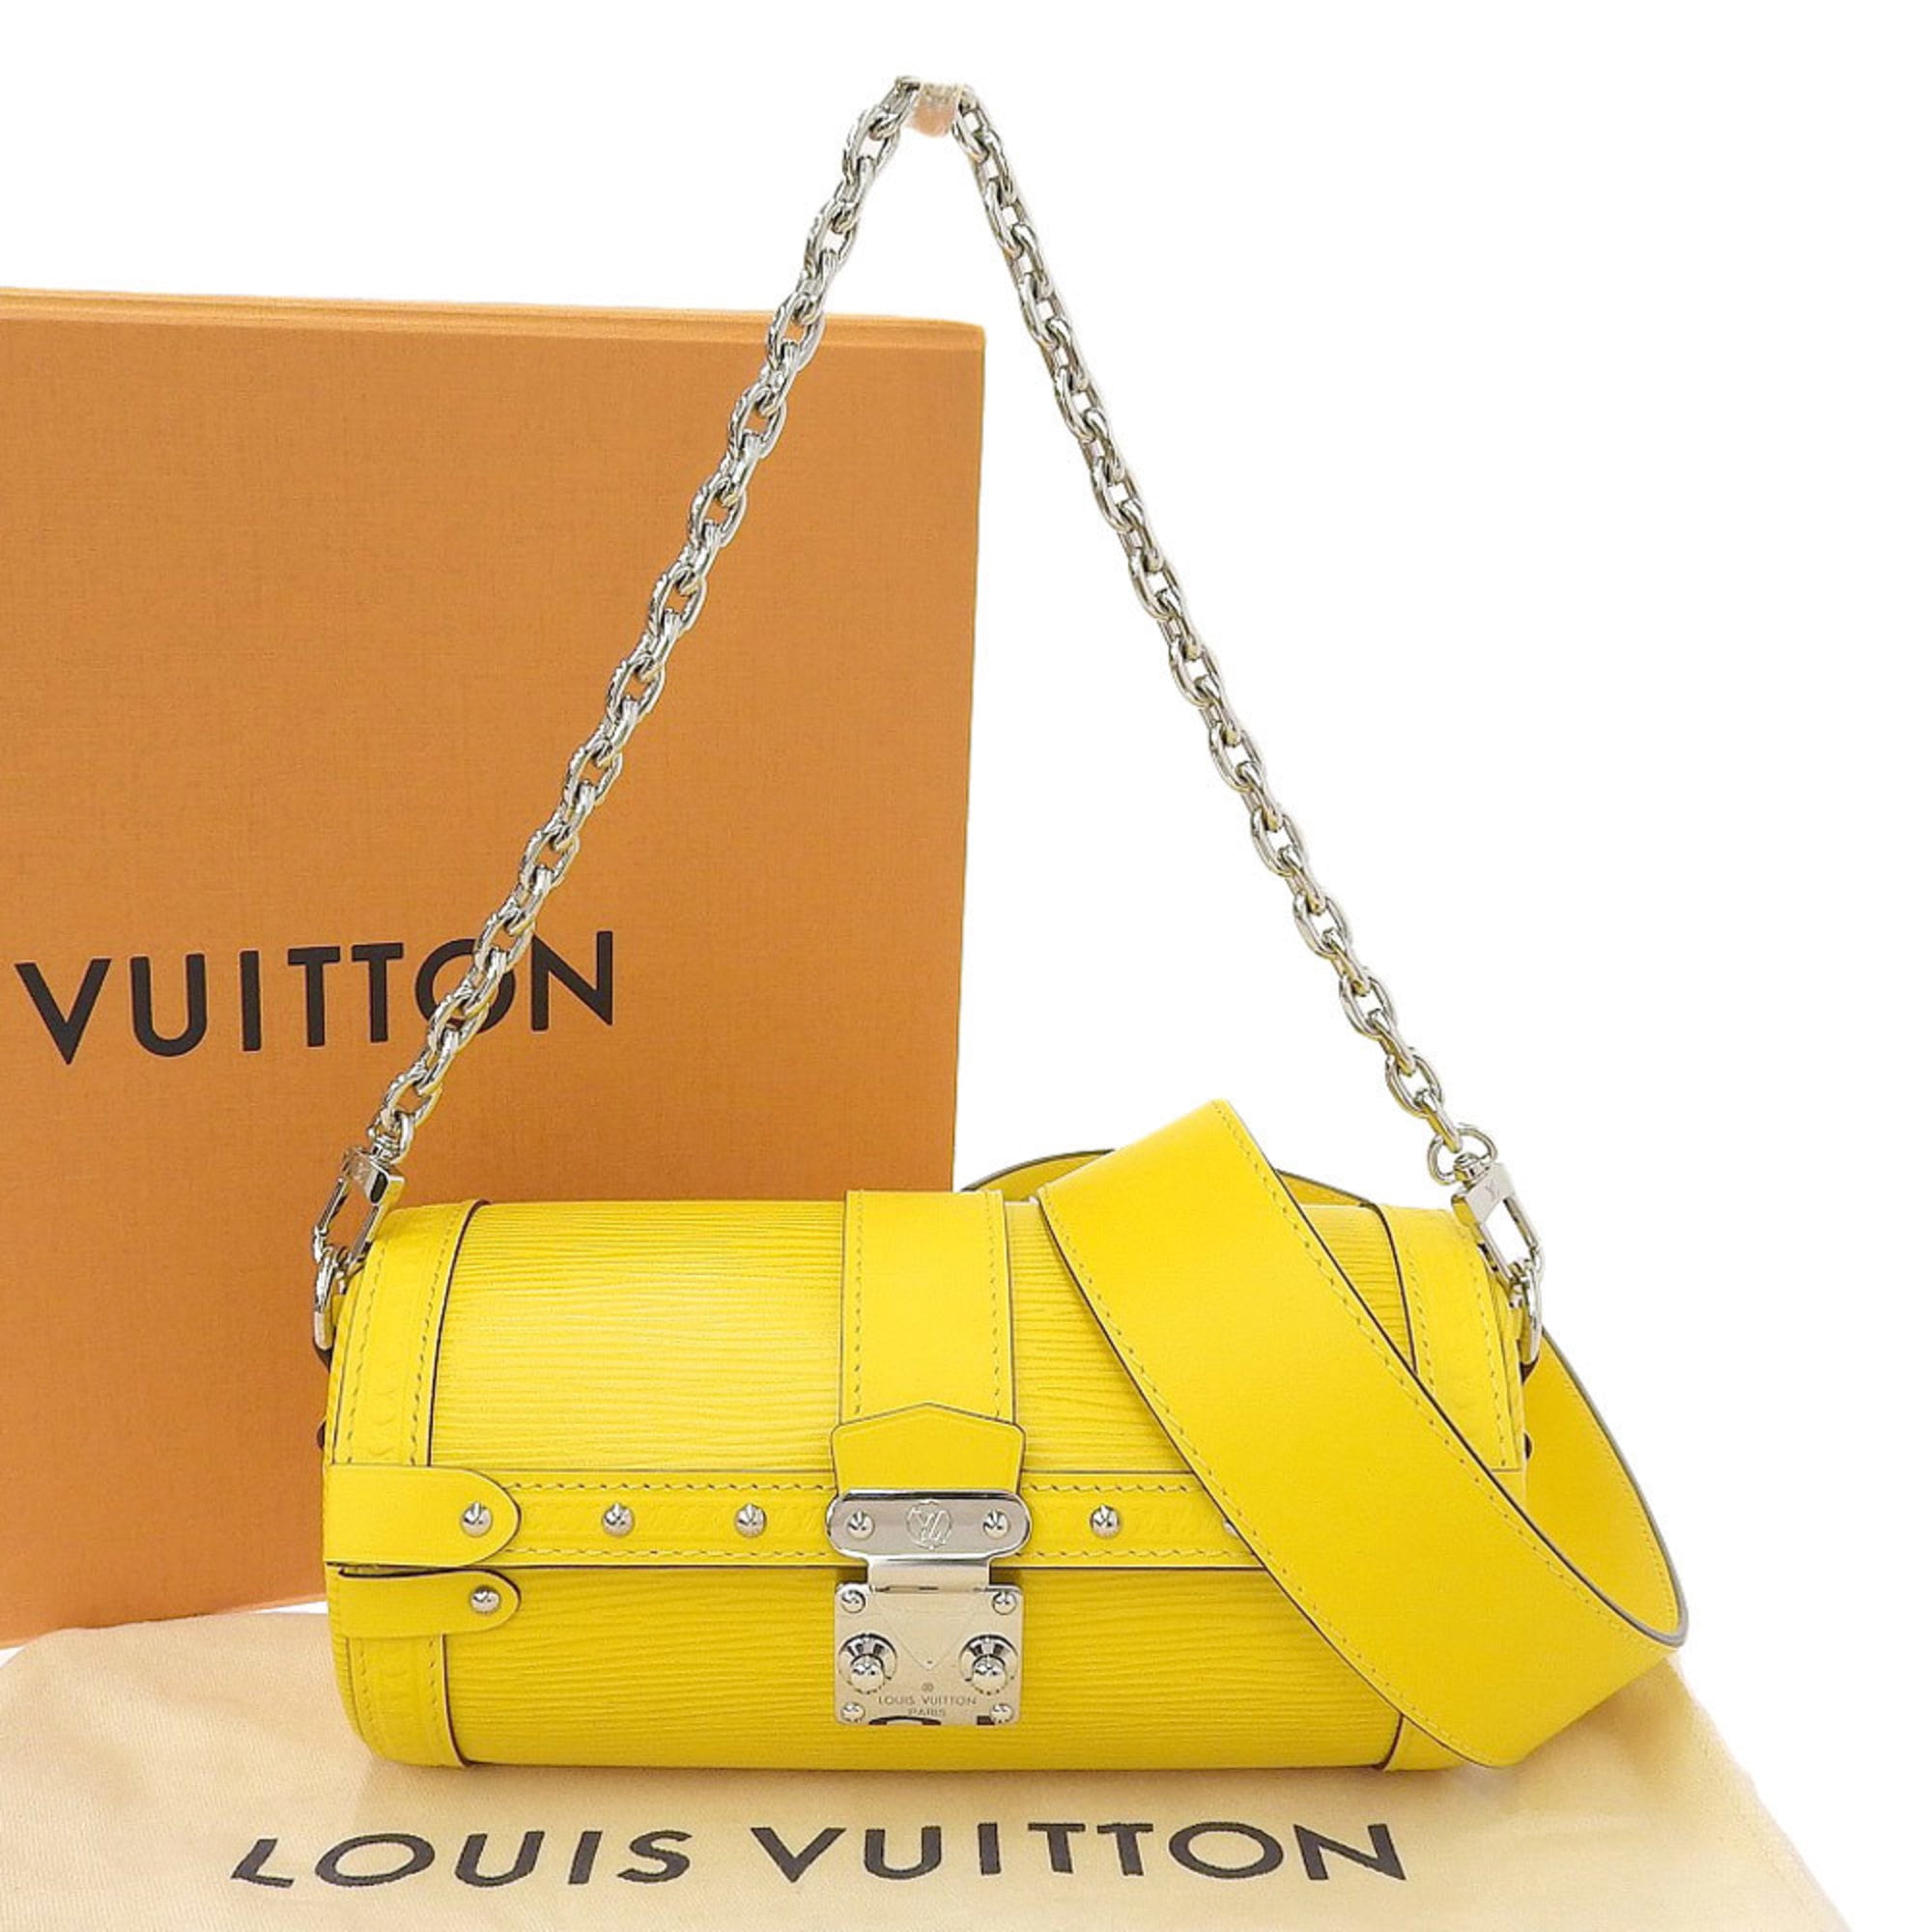 Louis Vuitton - Authenticated Papillon Trunk Handbag - Leather Yellow Plain for Women, Very Good Condition